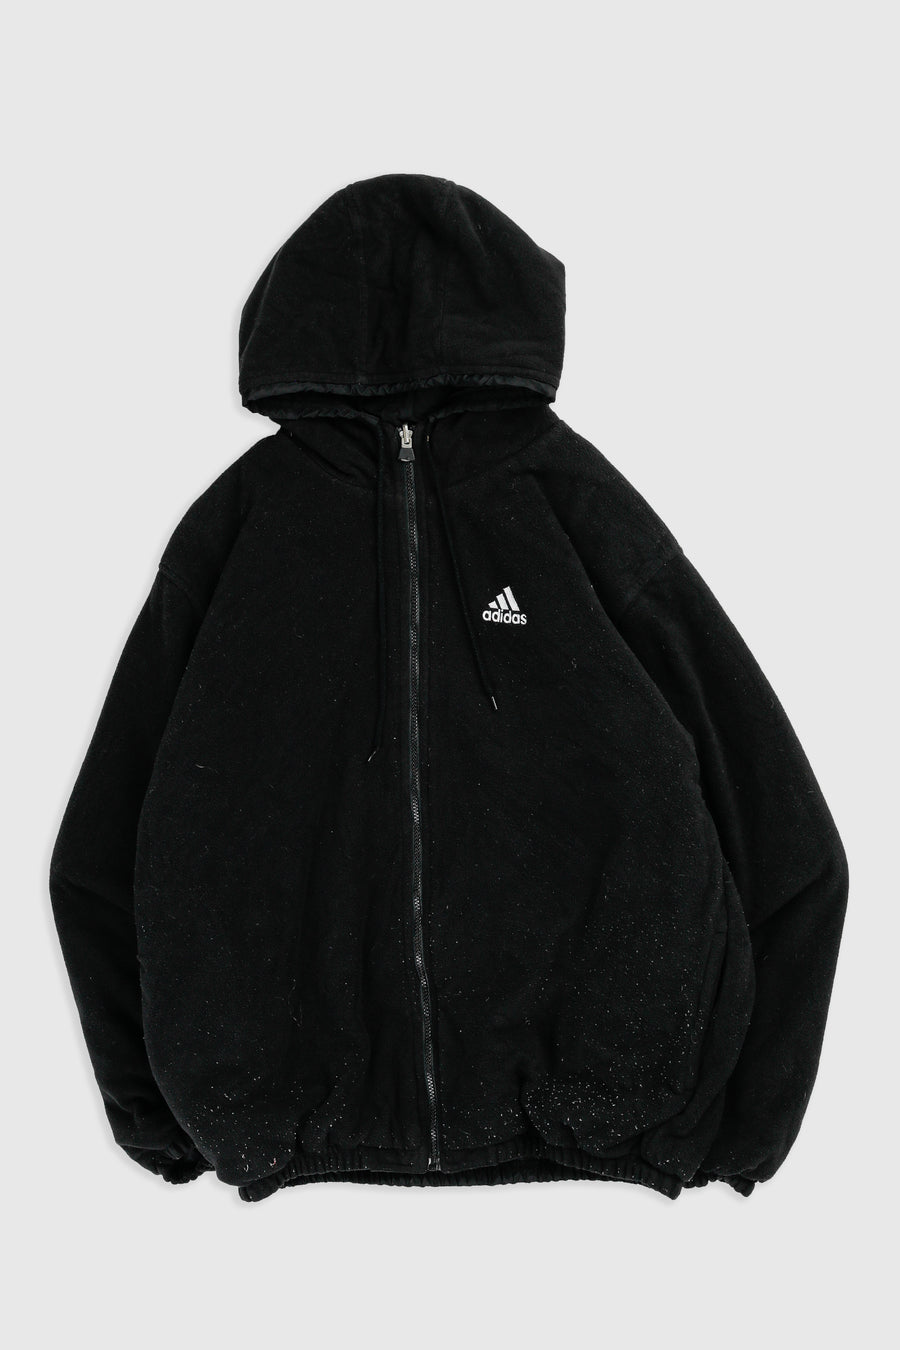 Vintage Adidas Reversible Fleece Jacket - M